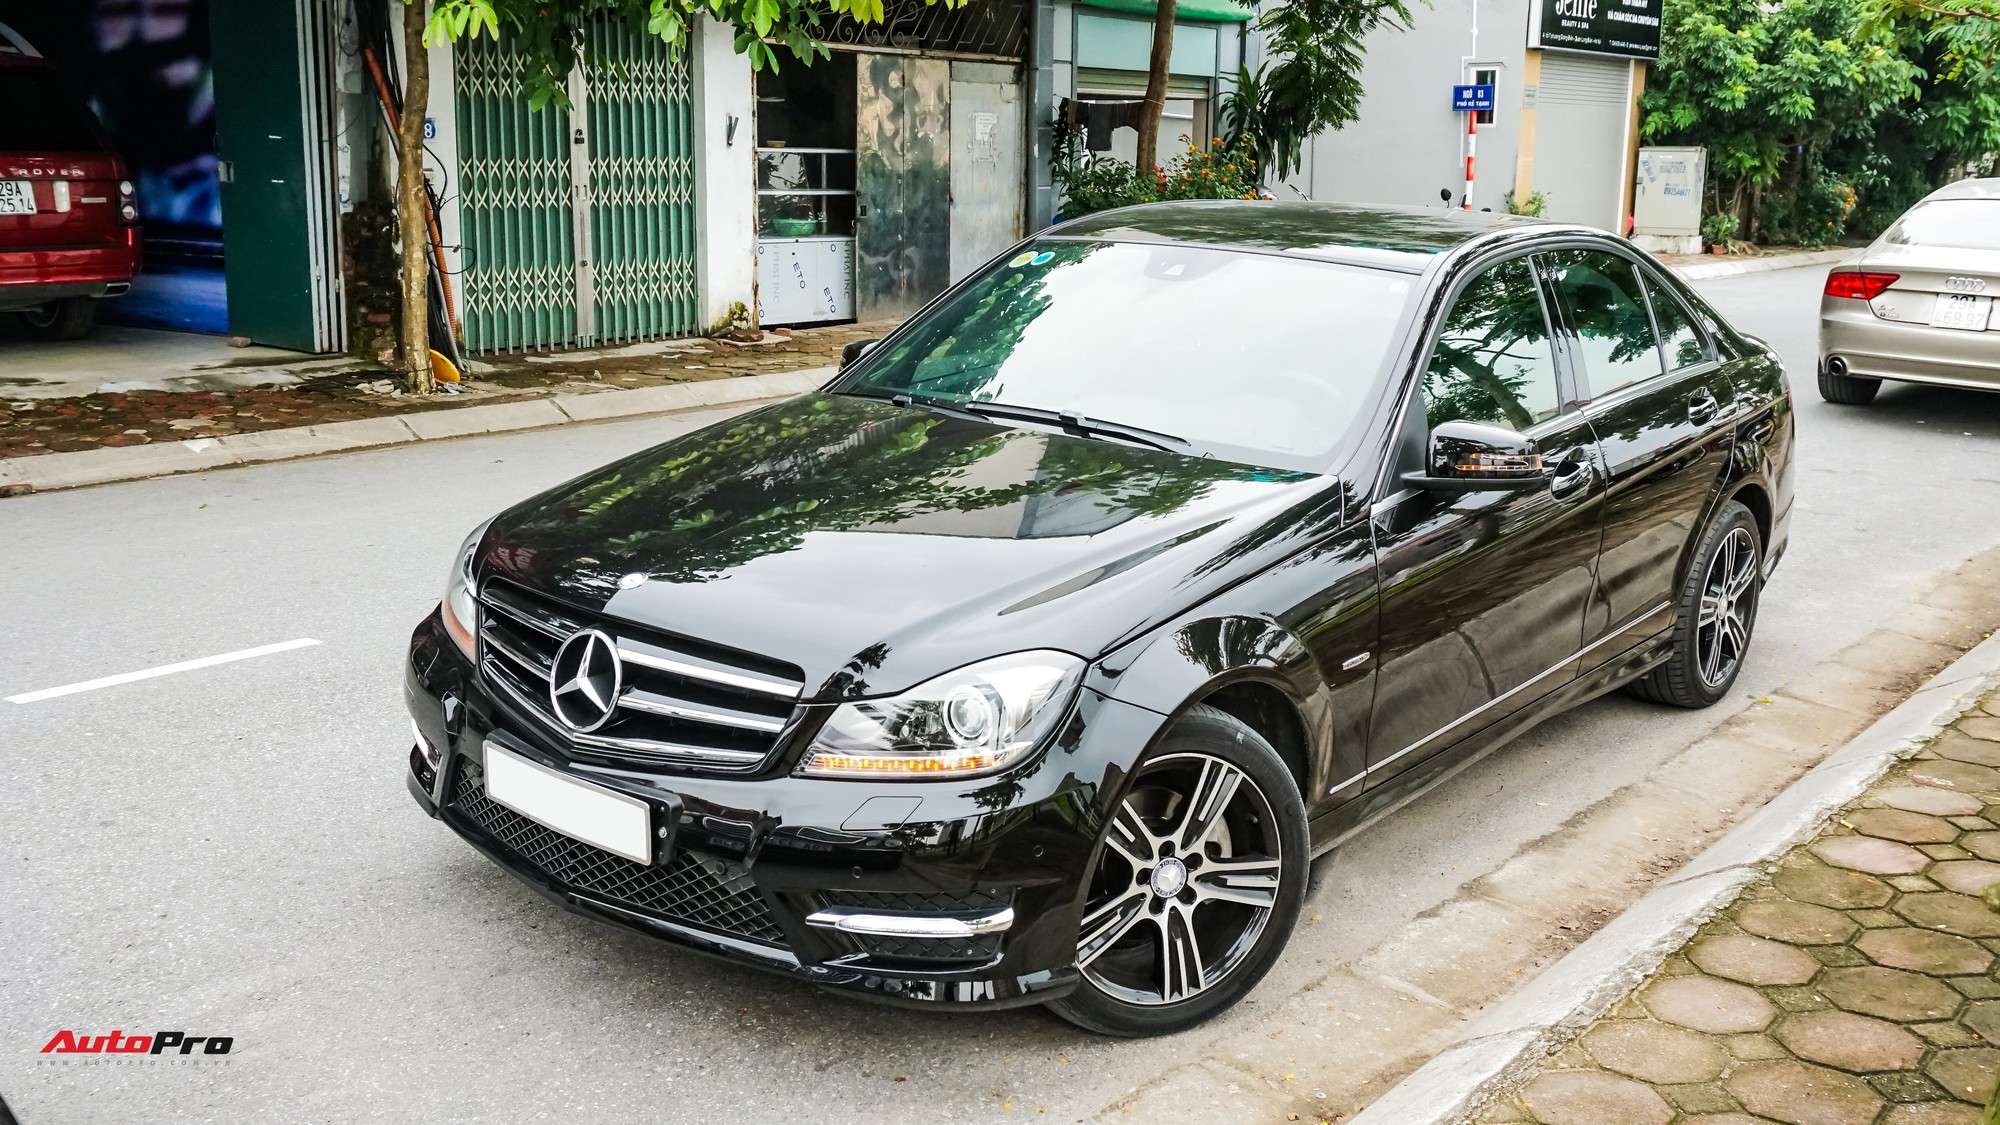 Bán xe ô tô MercedesBenz C200 2013 giá 980 triệu  925964